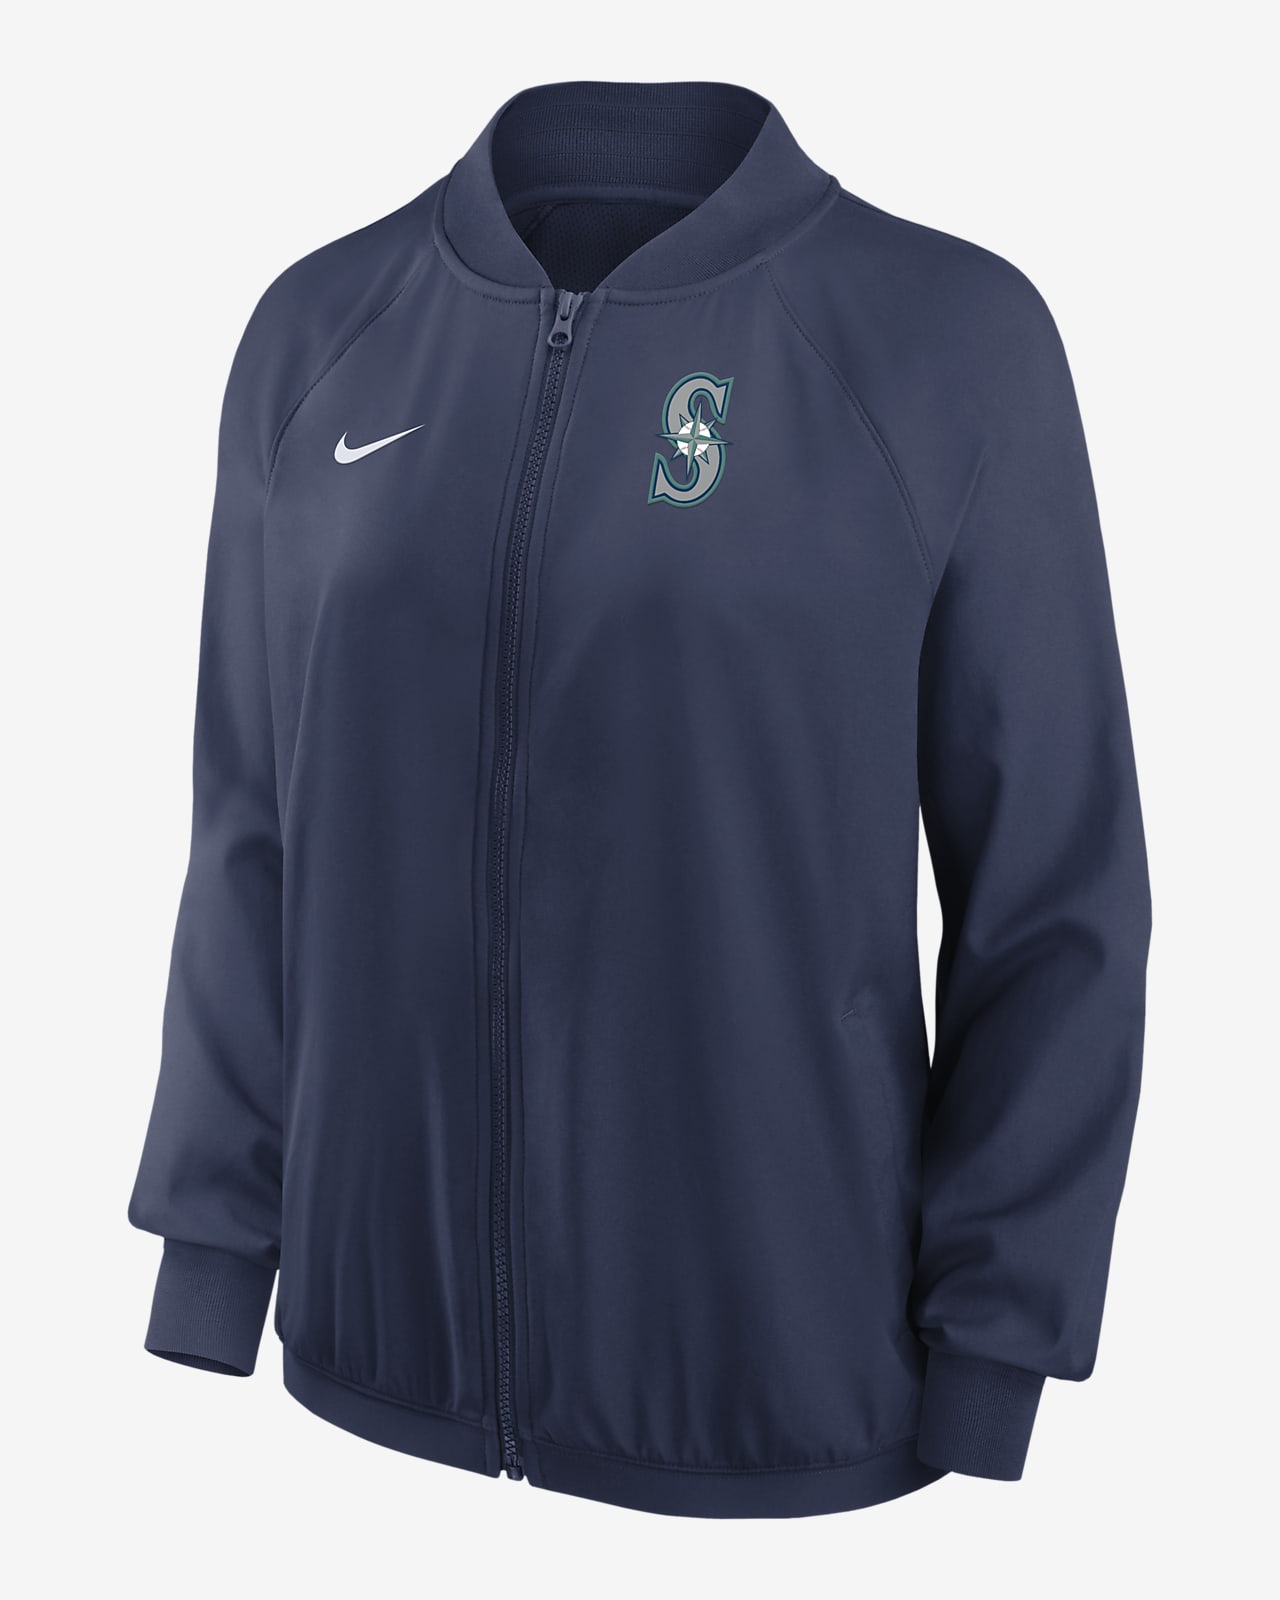 Nike Dri-FIT Team (MLB Seattle Mariners) Women's Full-Zip Jacket